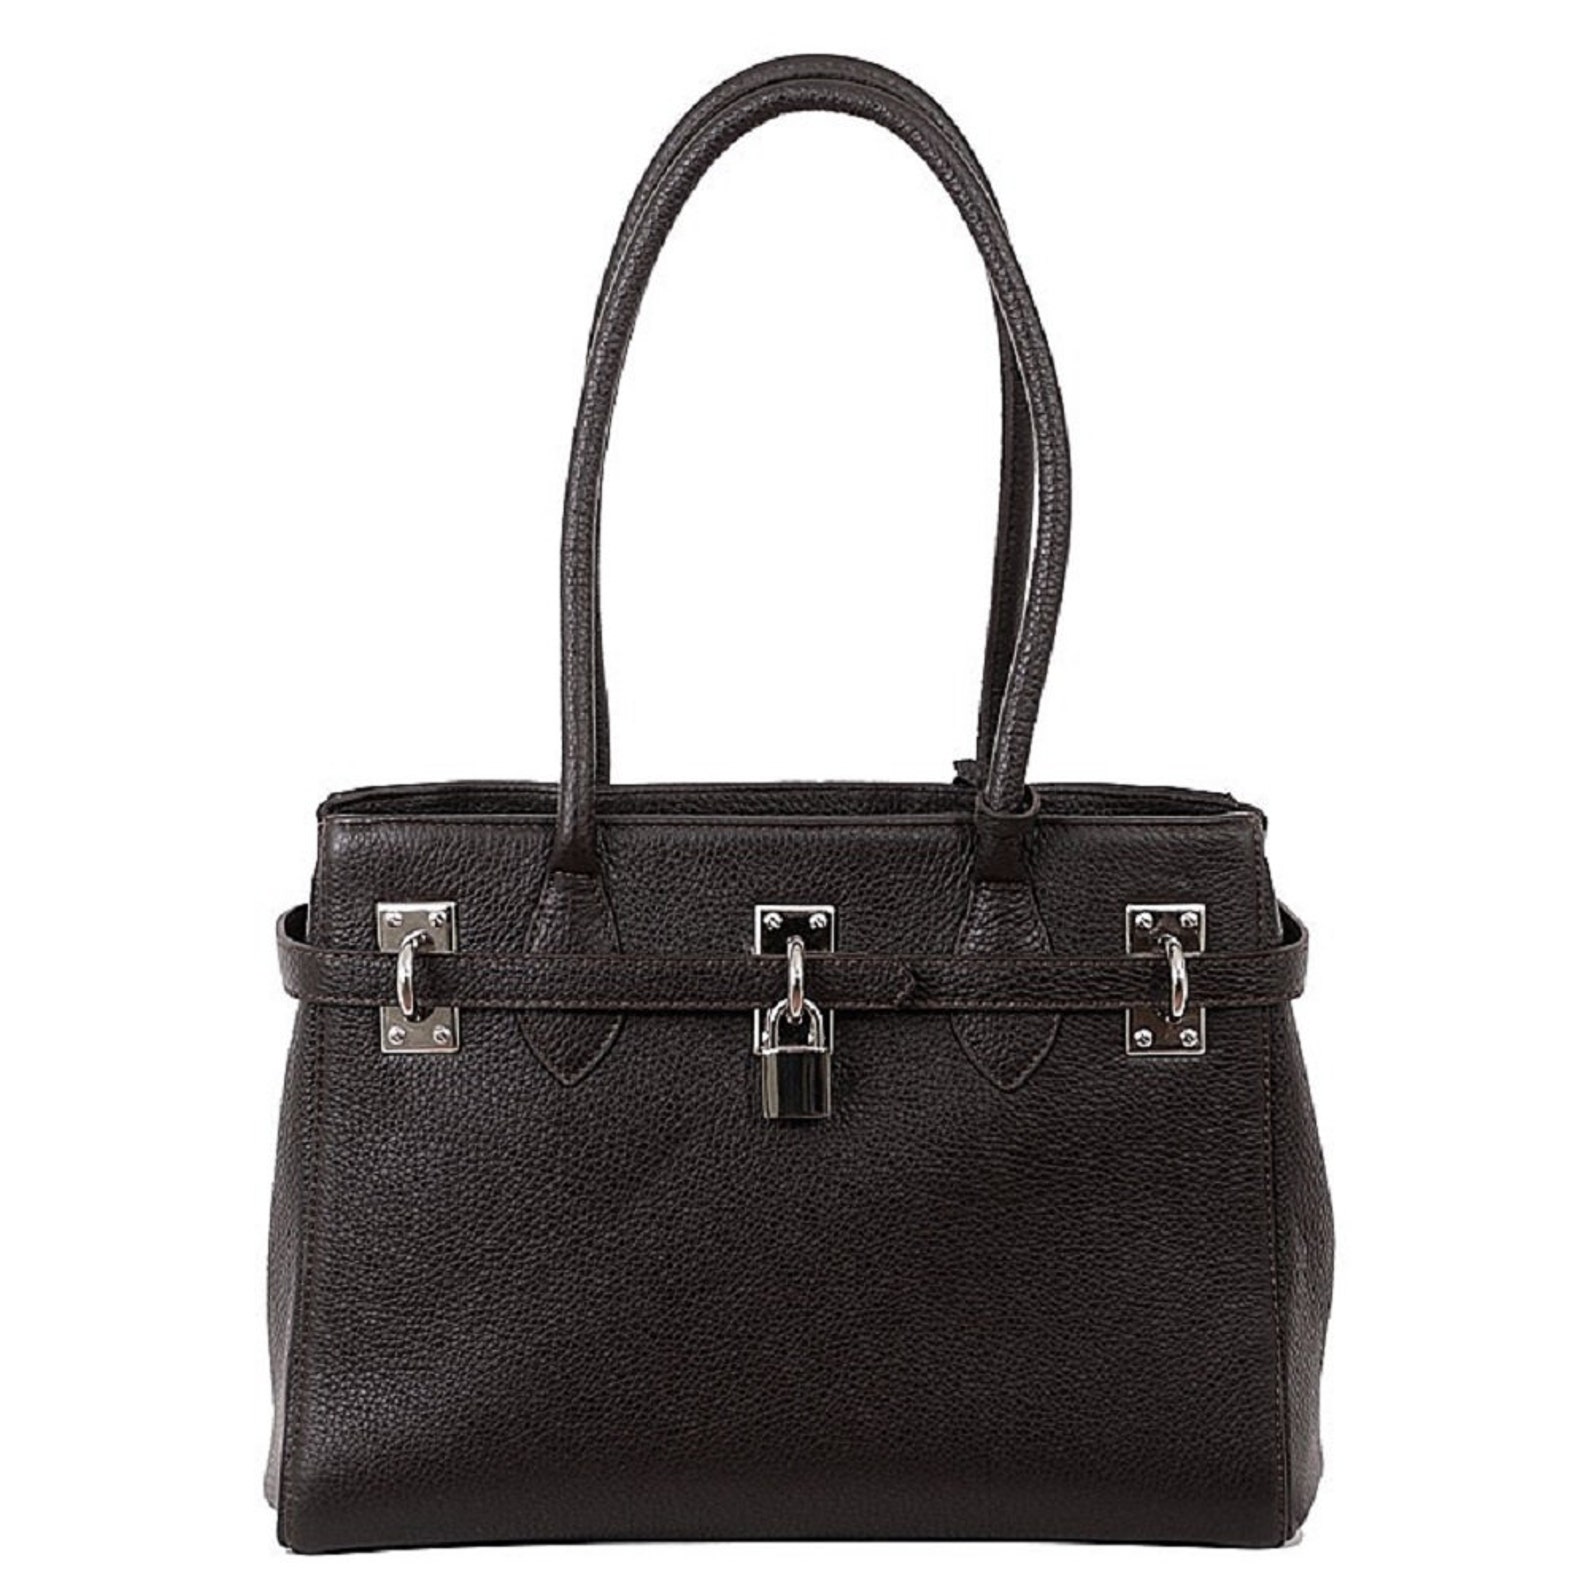 The Allegra by Pelle Mallory Ladies Italian Leather Handbag - Etsy